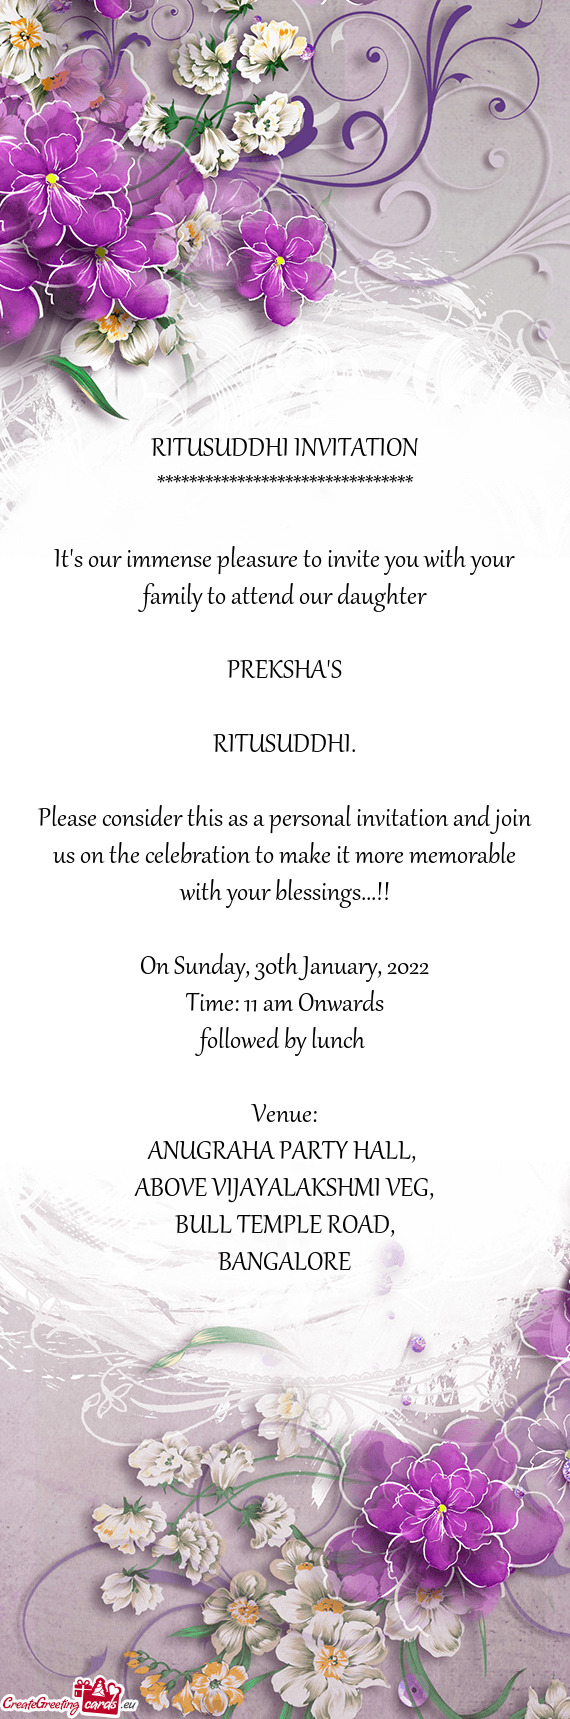 RITUSUDDHI INVITATION